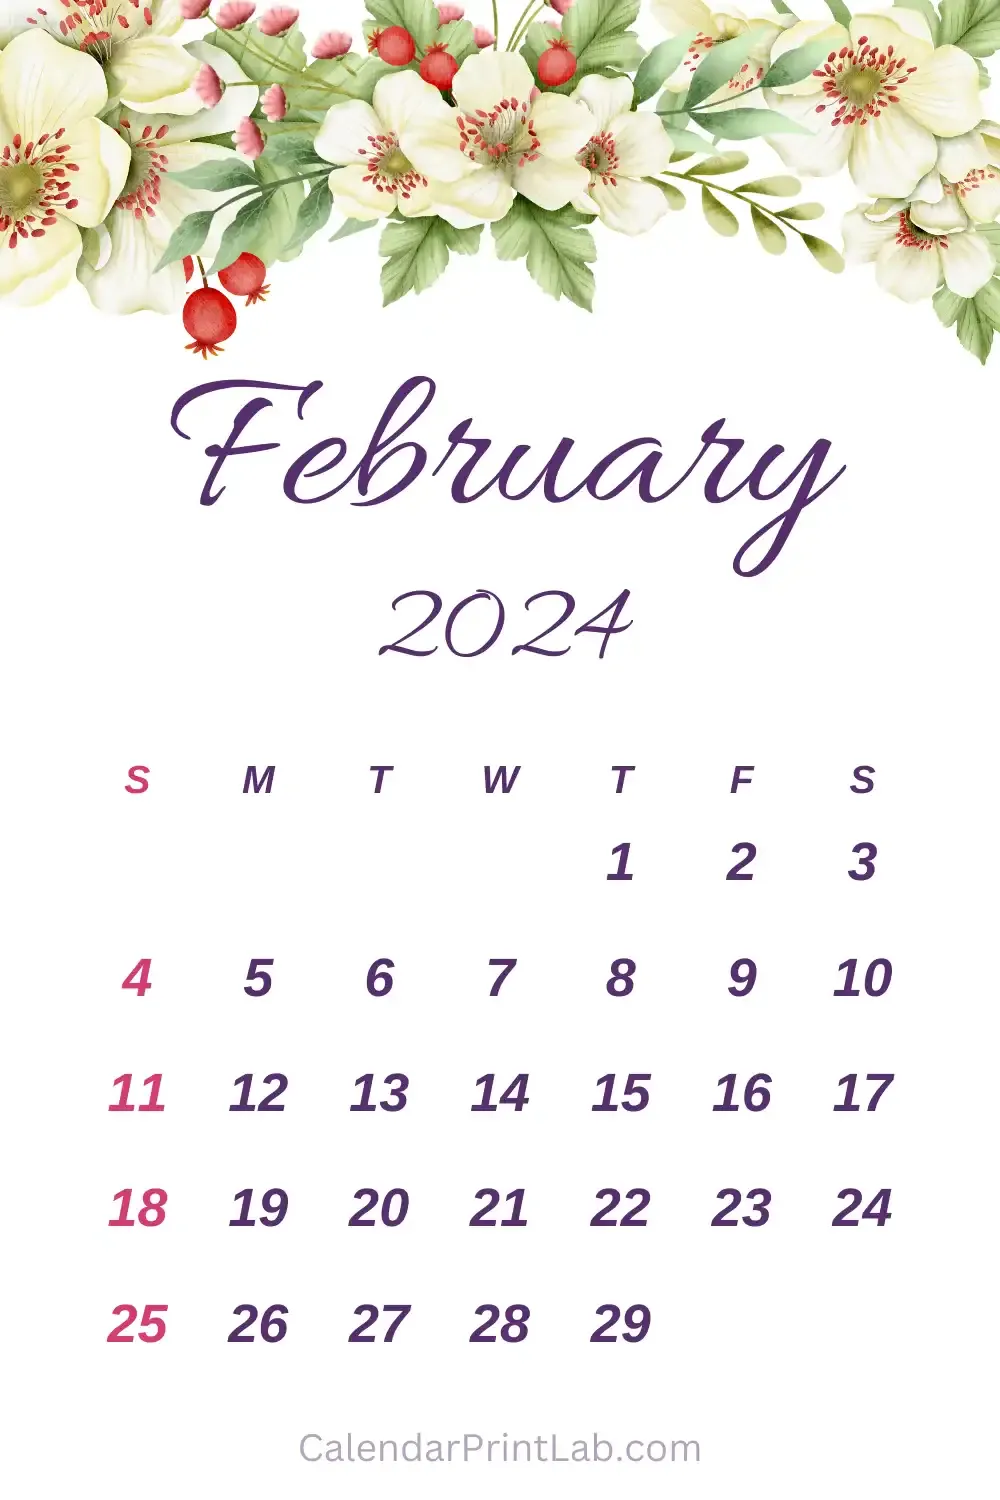 Free February 2024 Flower Calendar